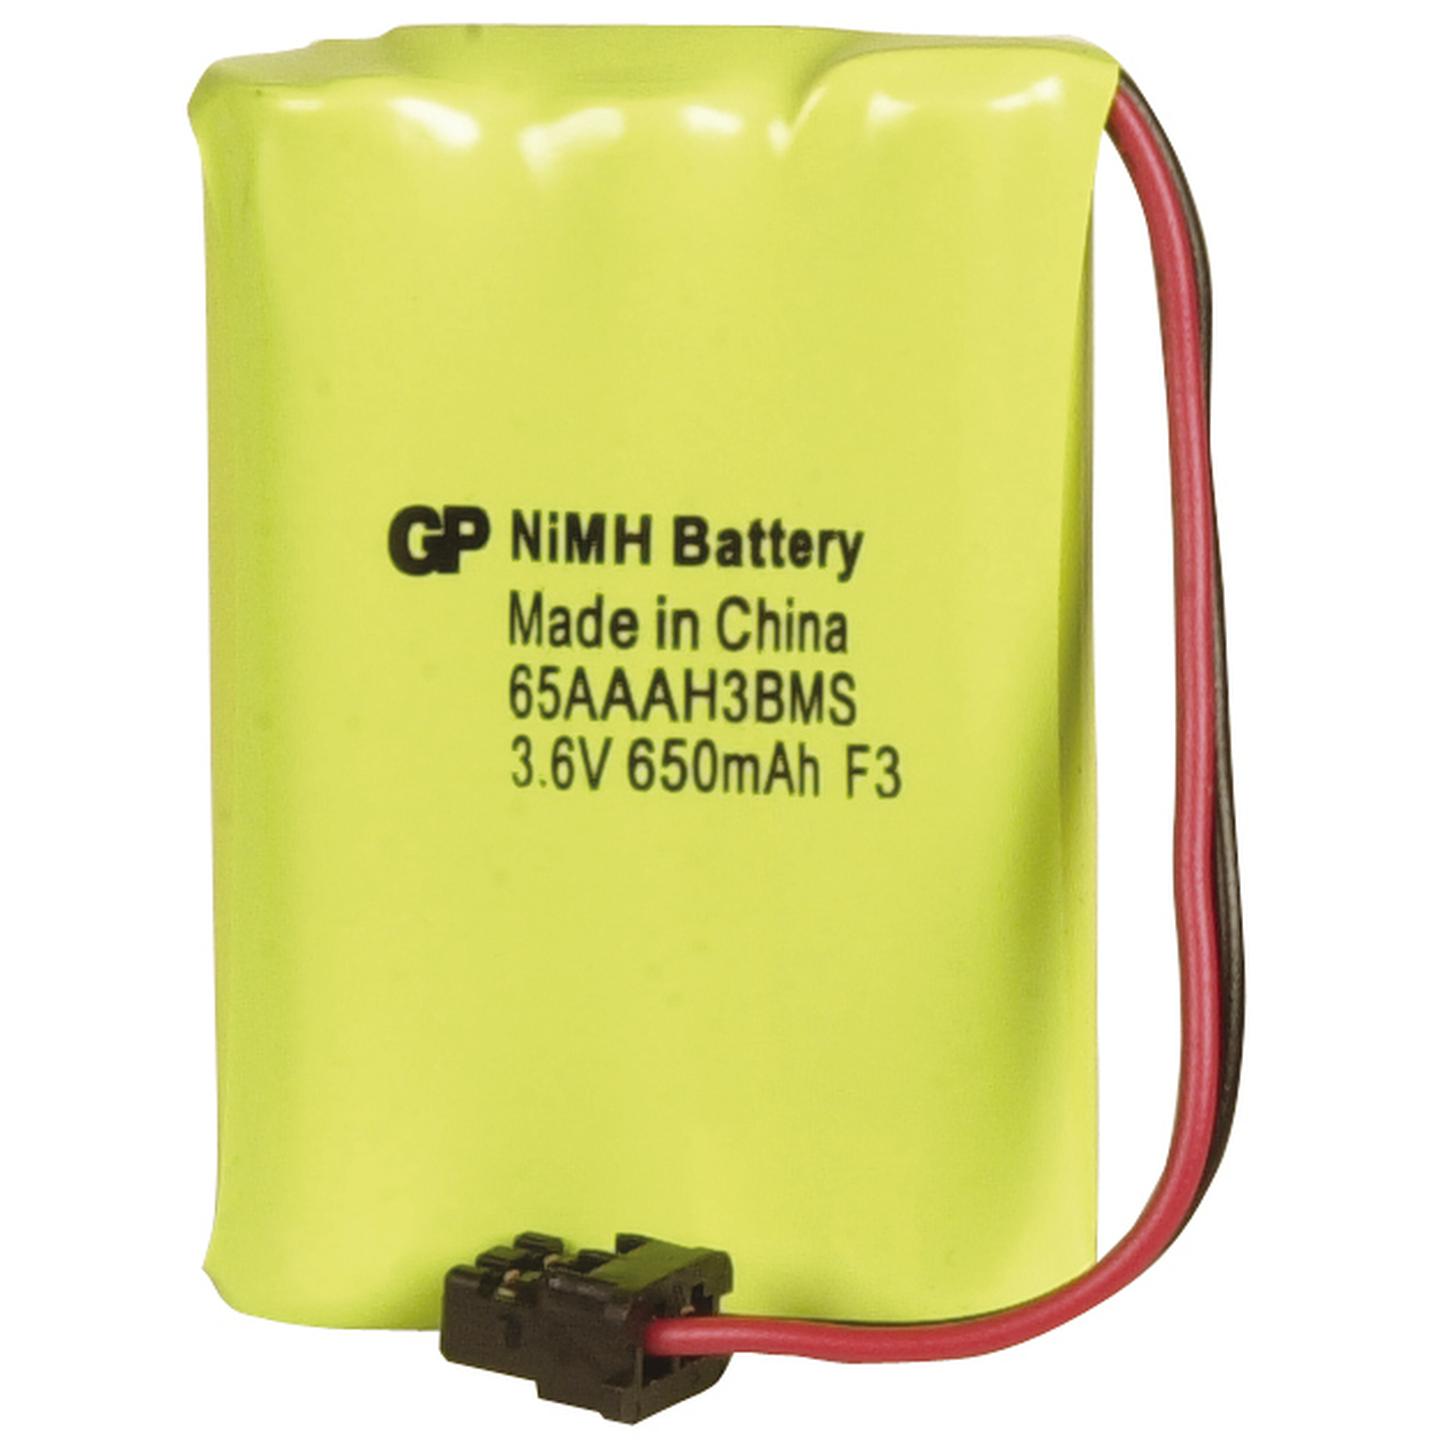 3.6V 650mAH Rechargeable Ni-MH Battery